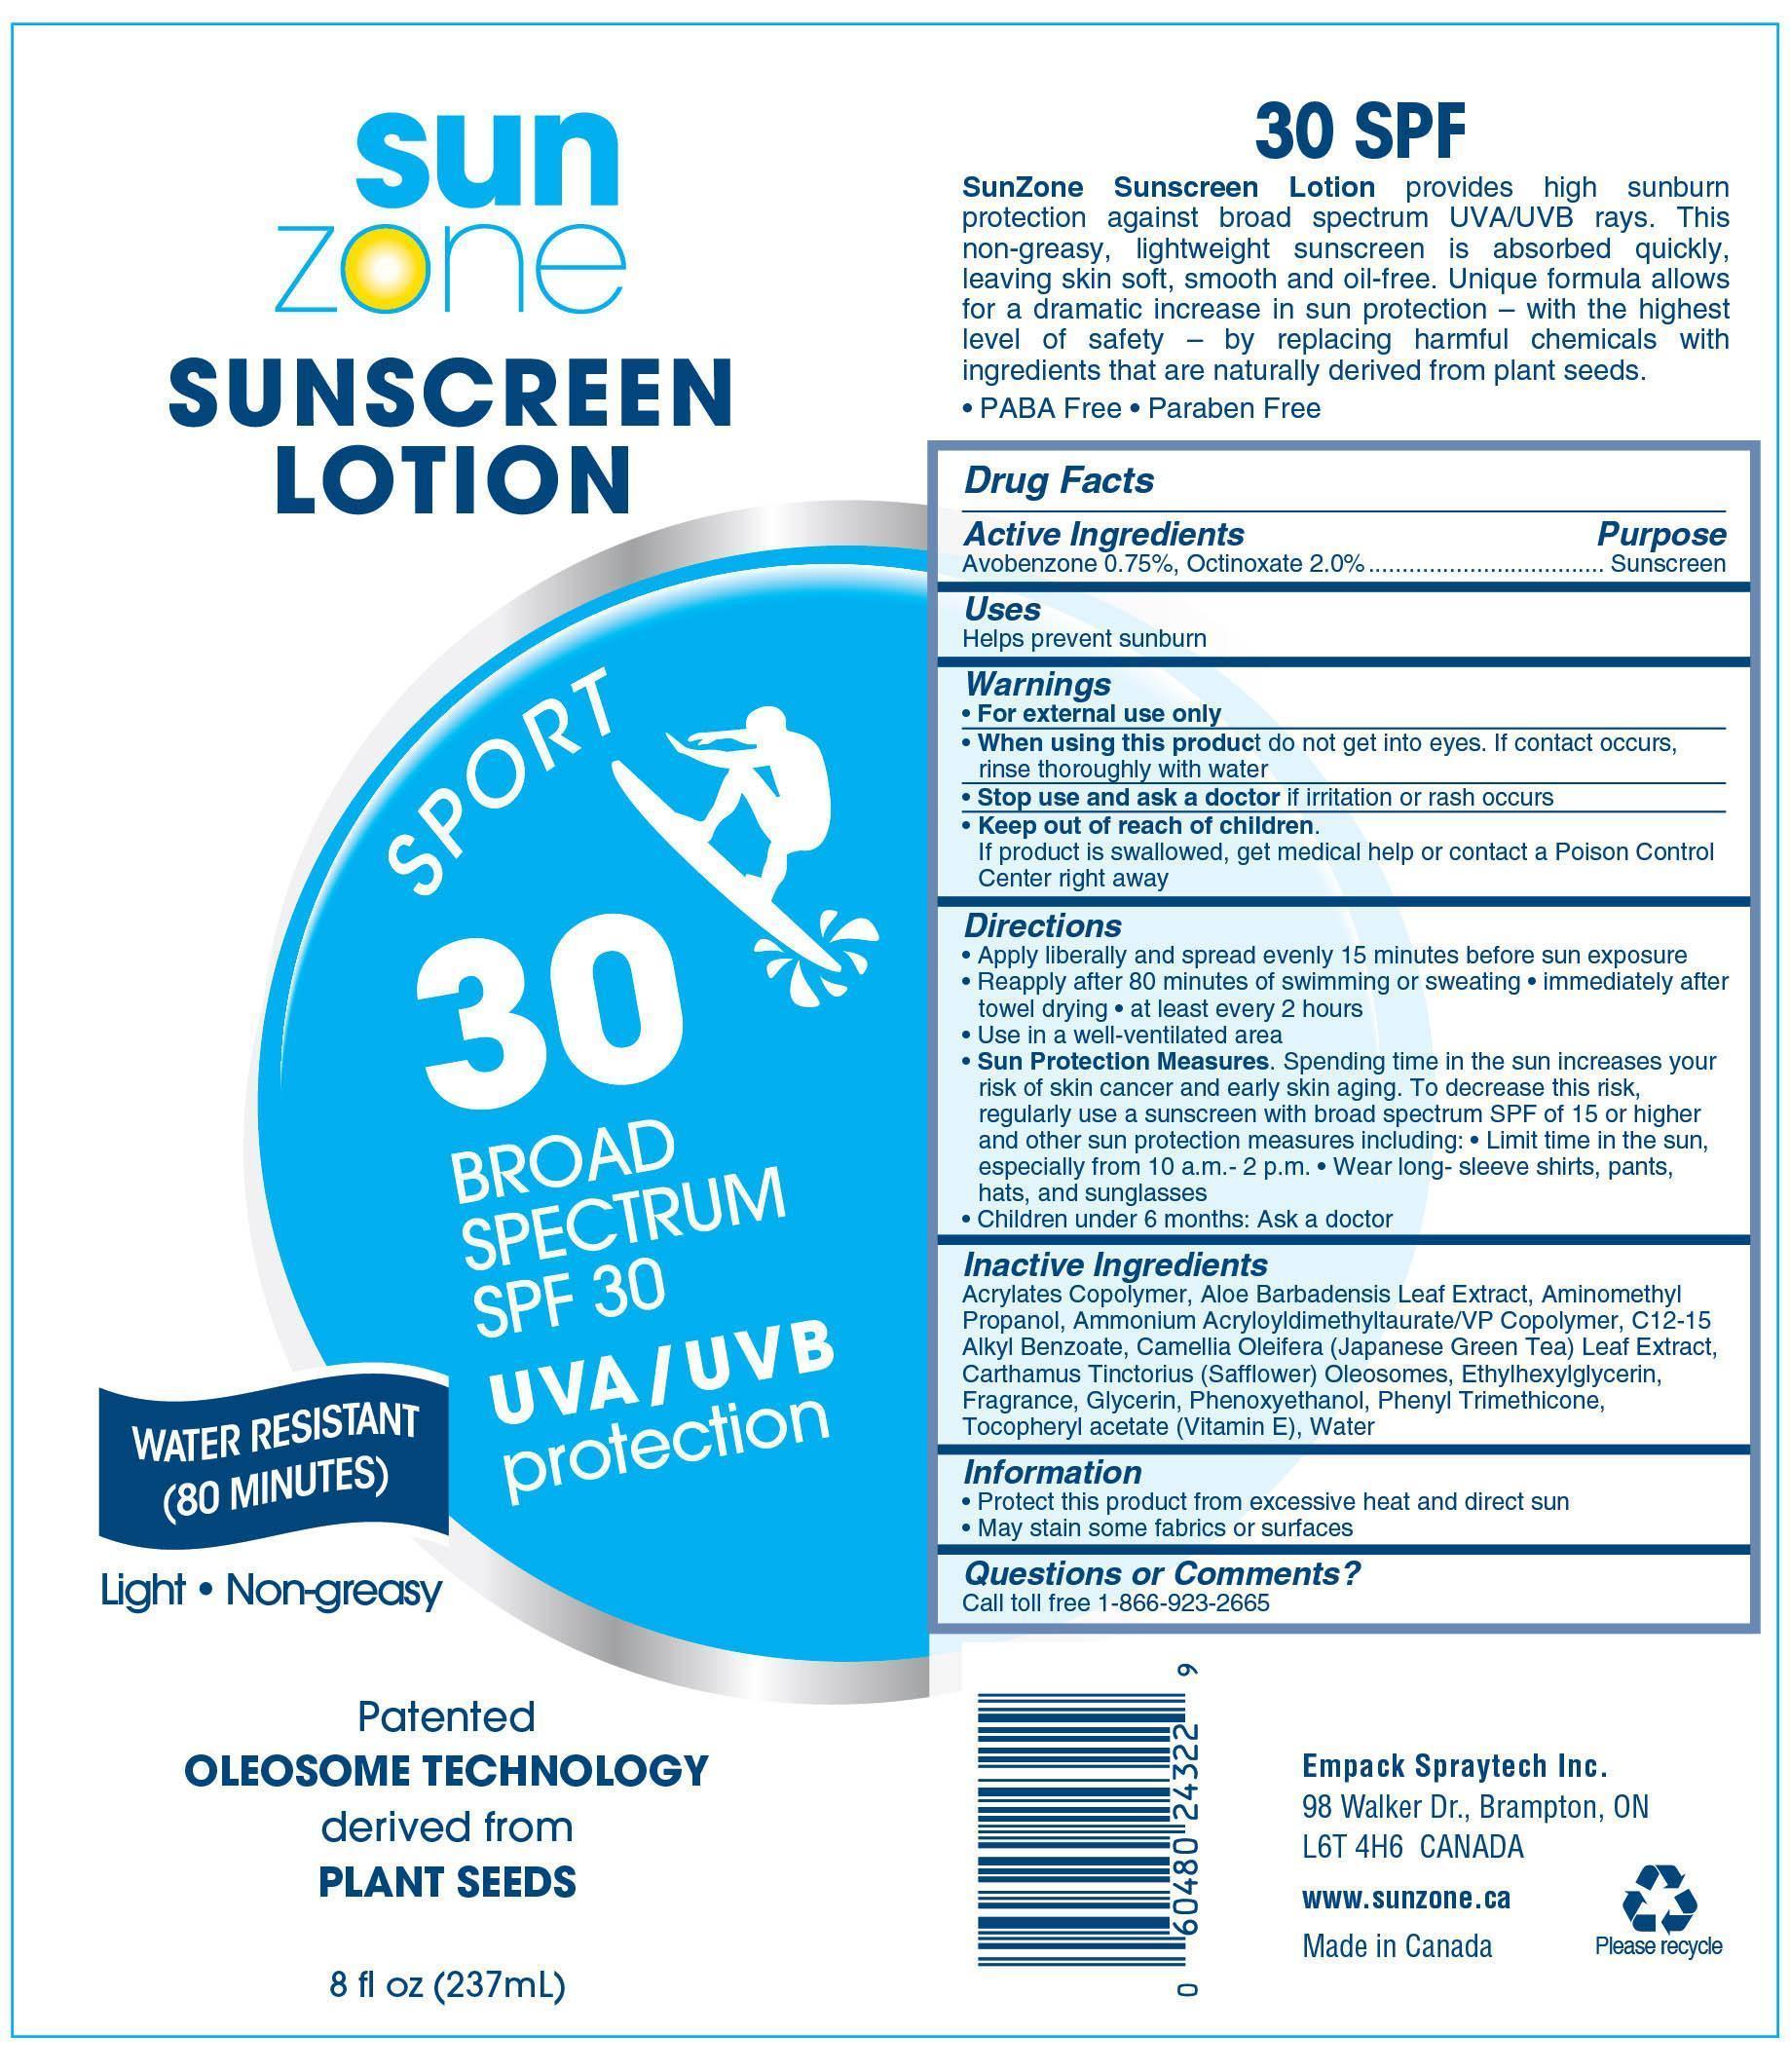 Sunzone Sport Spf 30 Sunscreen Broad Spectrum | Octinoxate And Avobenzone Lotion while Breastfeeding